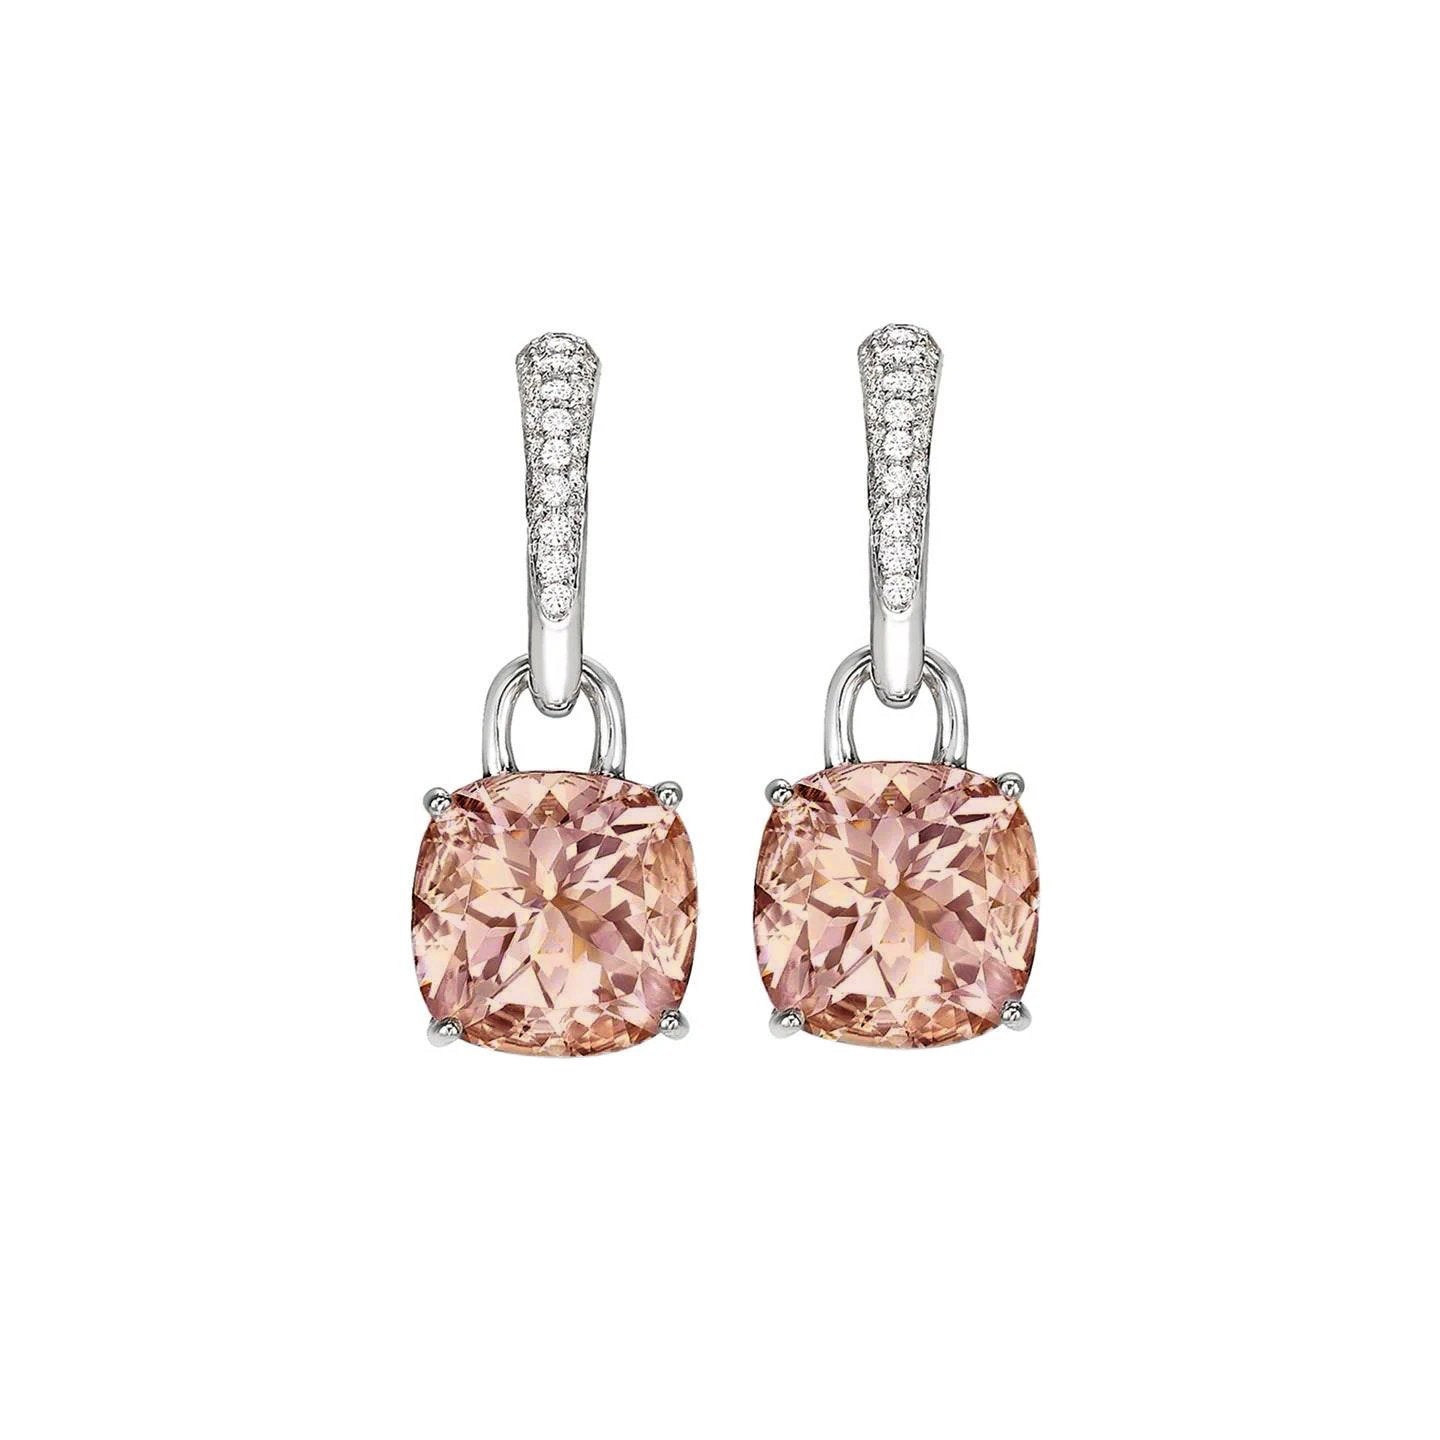 Morganite And Diamonds Dangle Earrings White Gold 14K 8.80 Carats - Gemstone Earring-harrychadent.ca